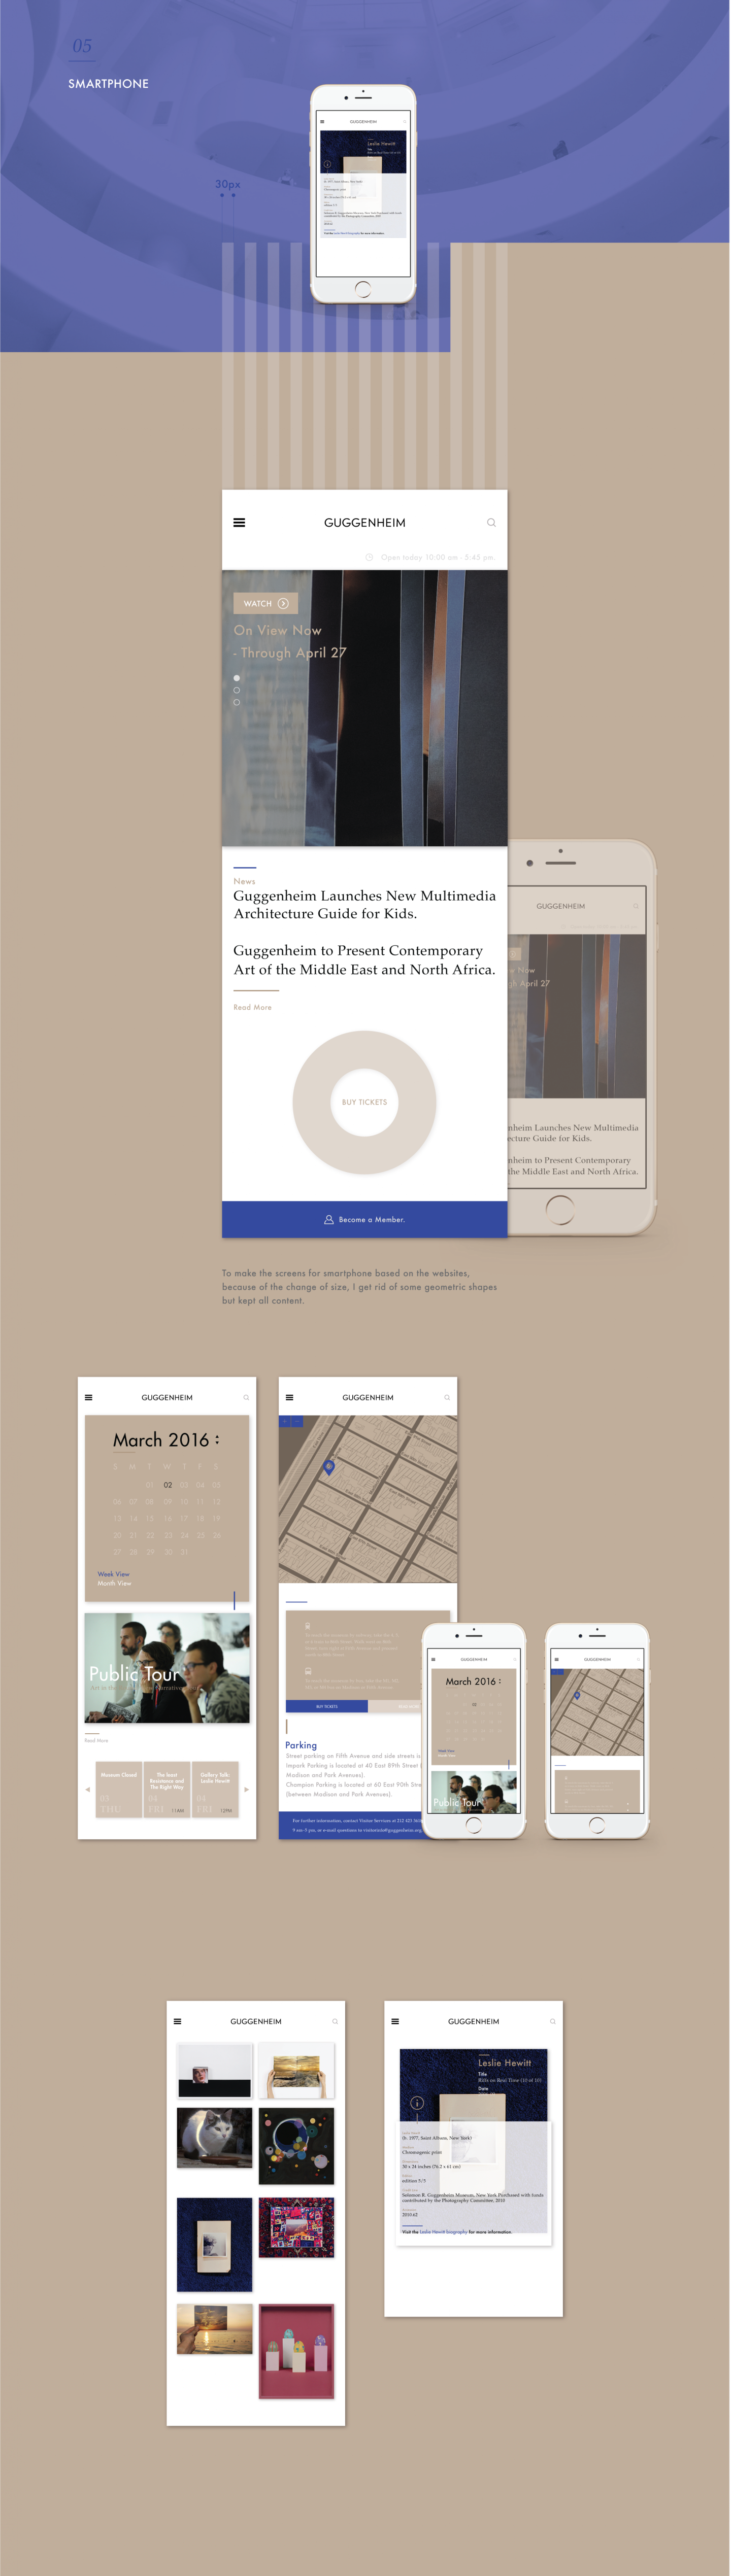 Guggenheim Website Redesign